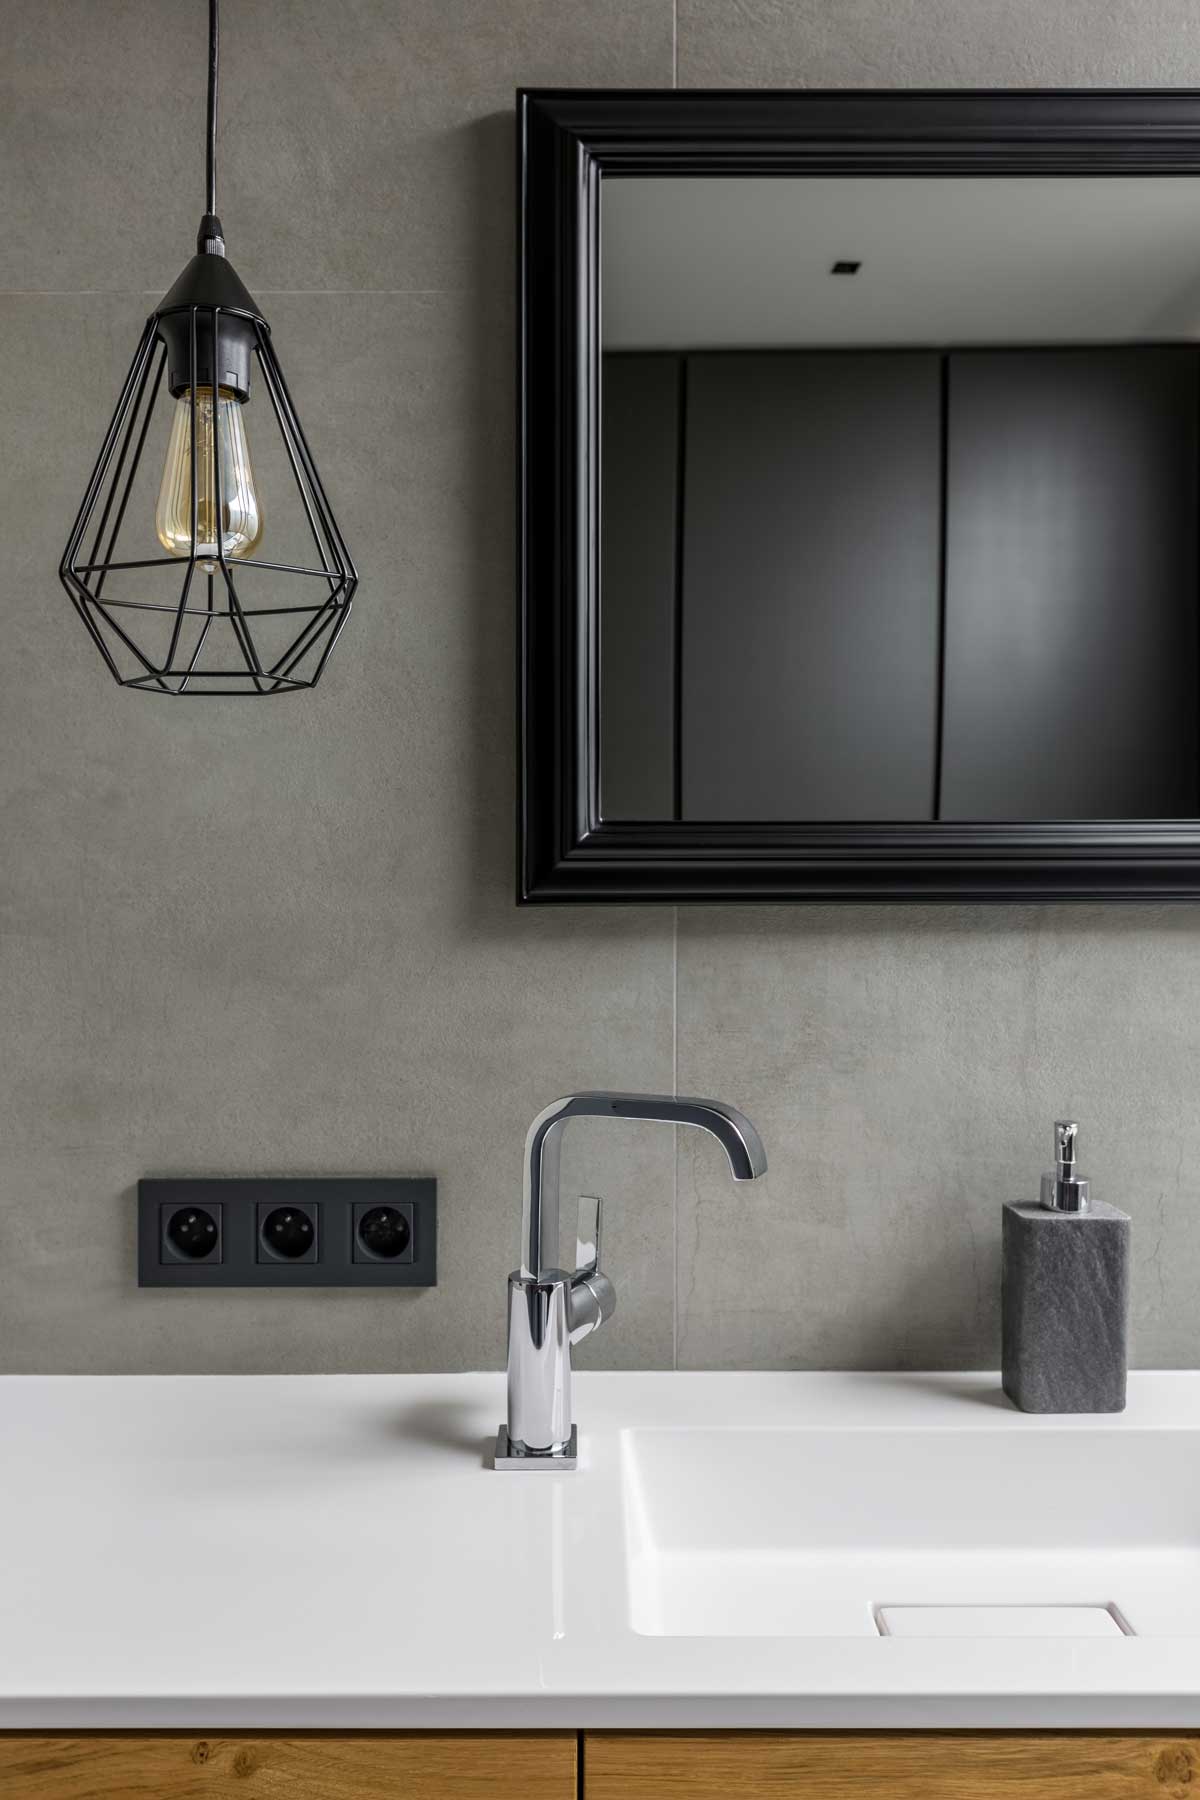 Bathroom Renovation Trends for your Sydney Home